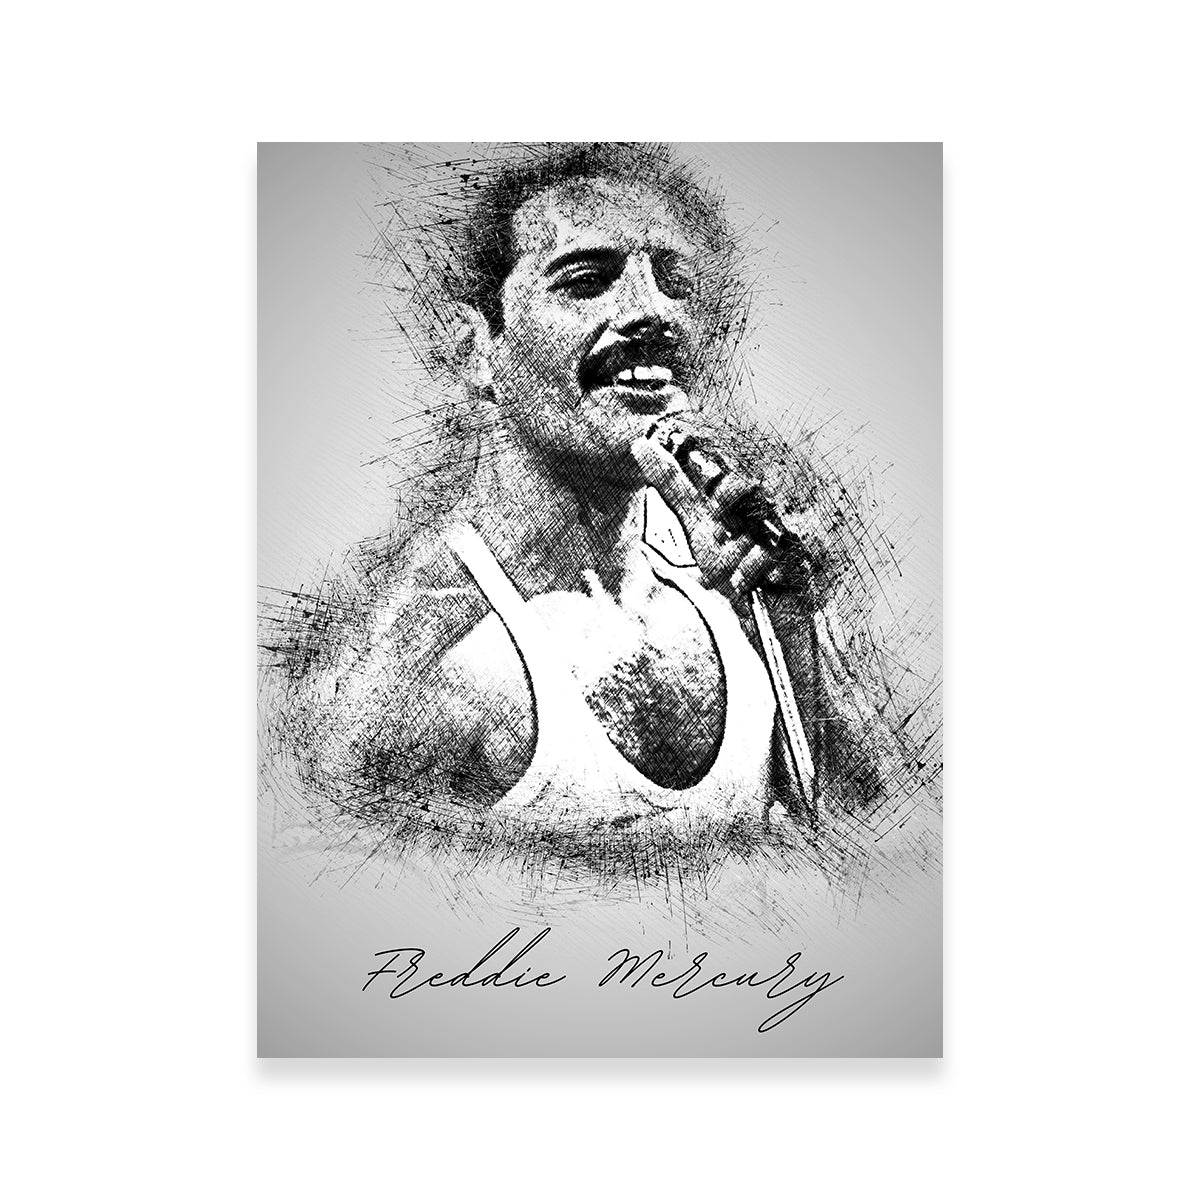 Freddie Mercury with mic